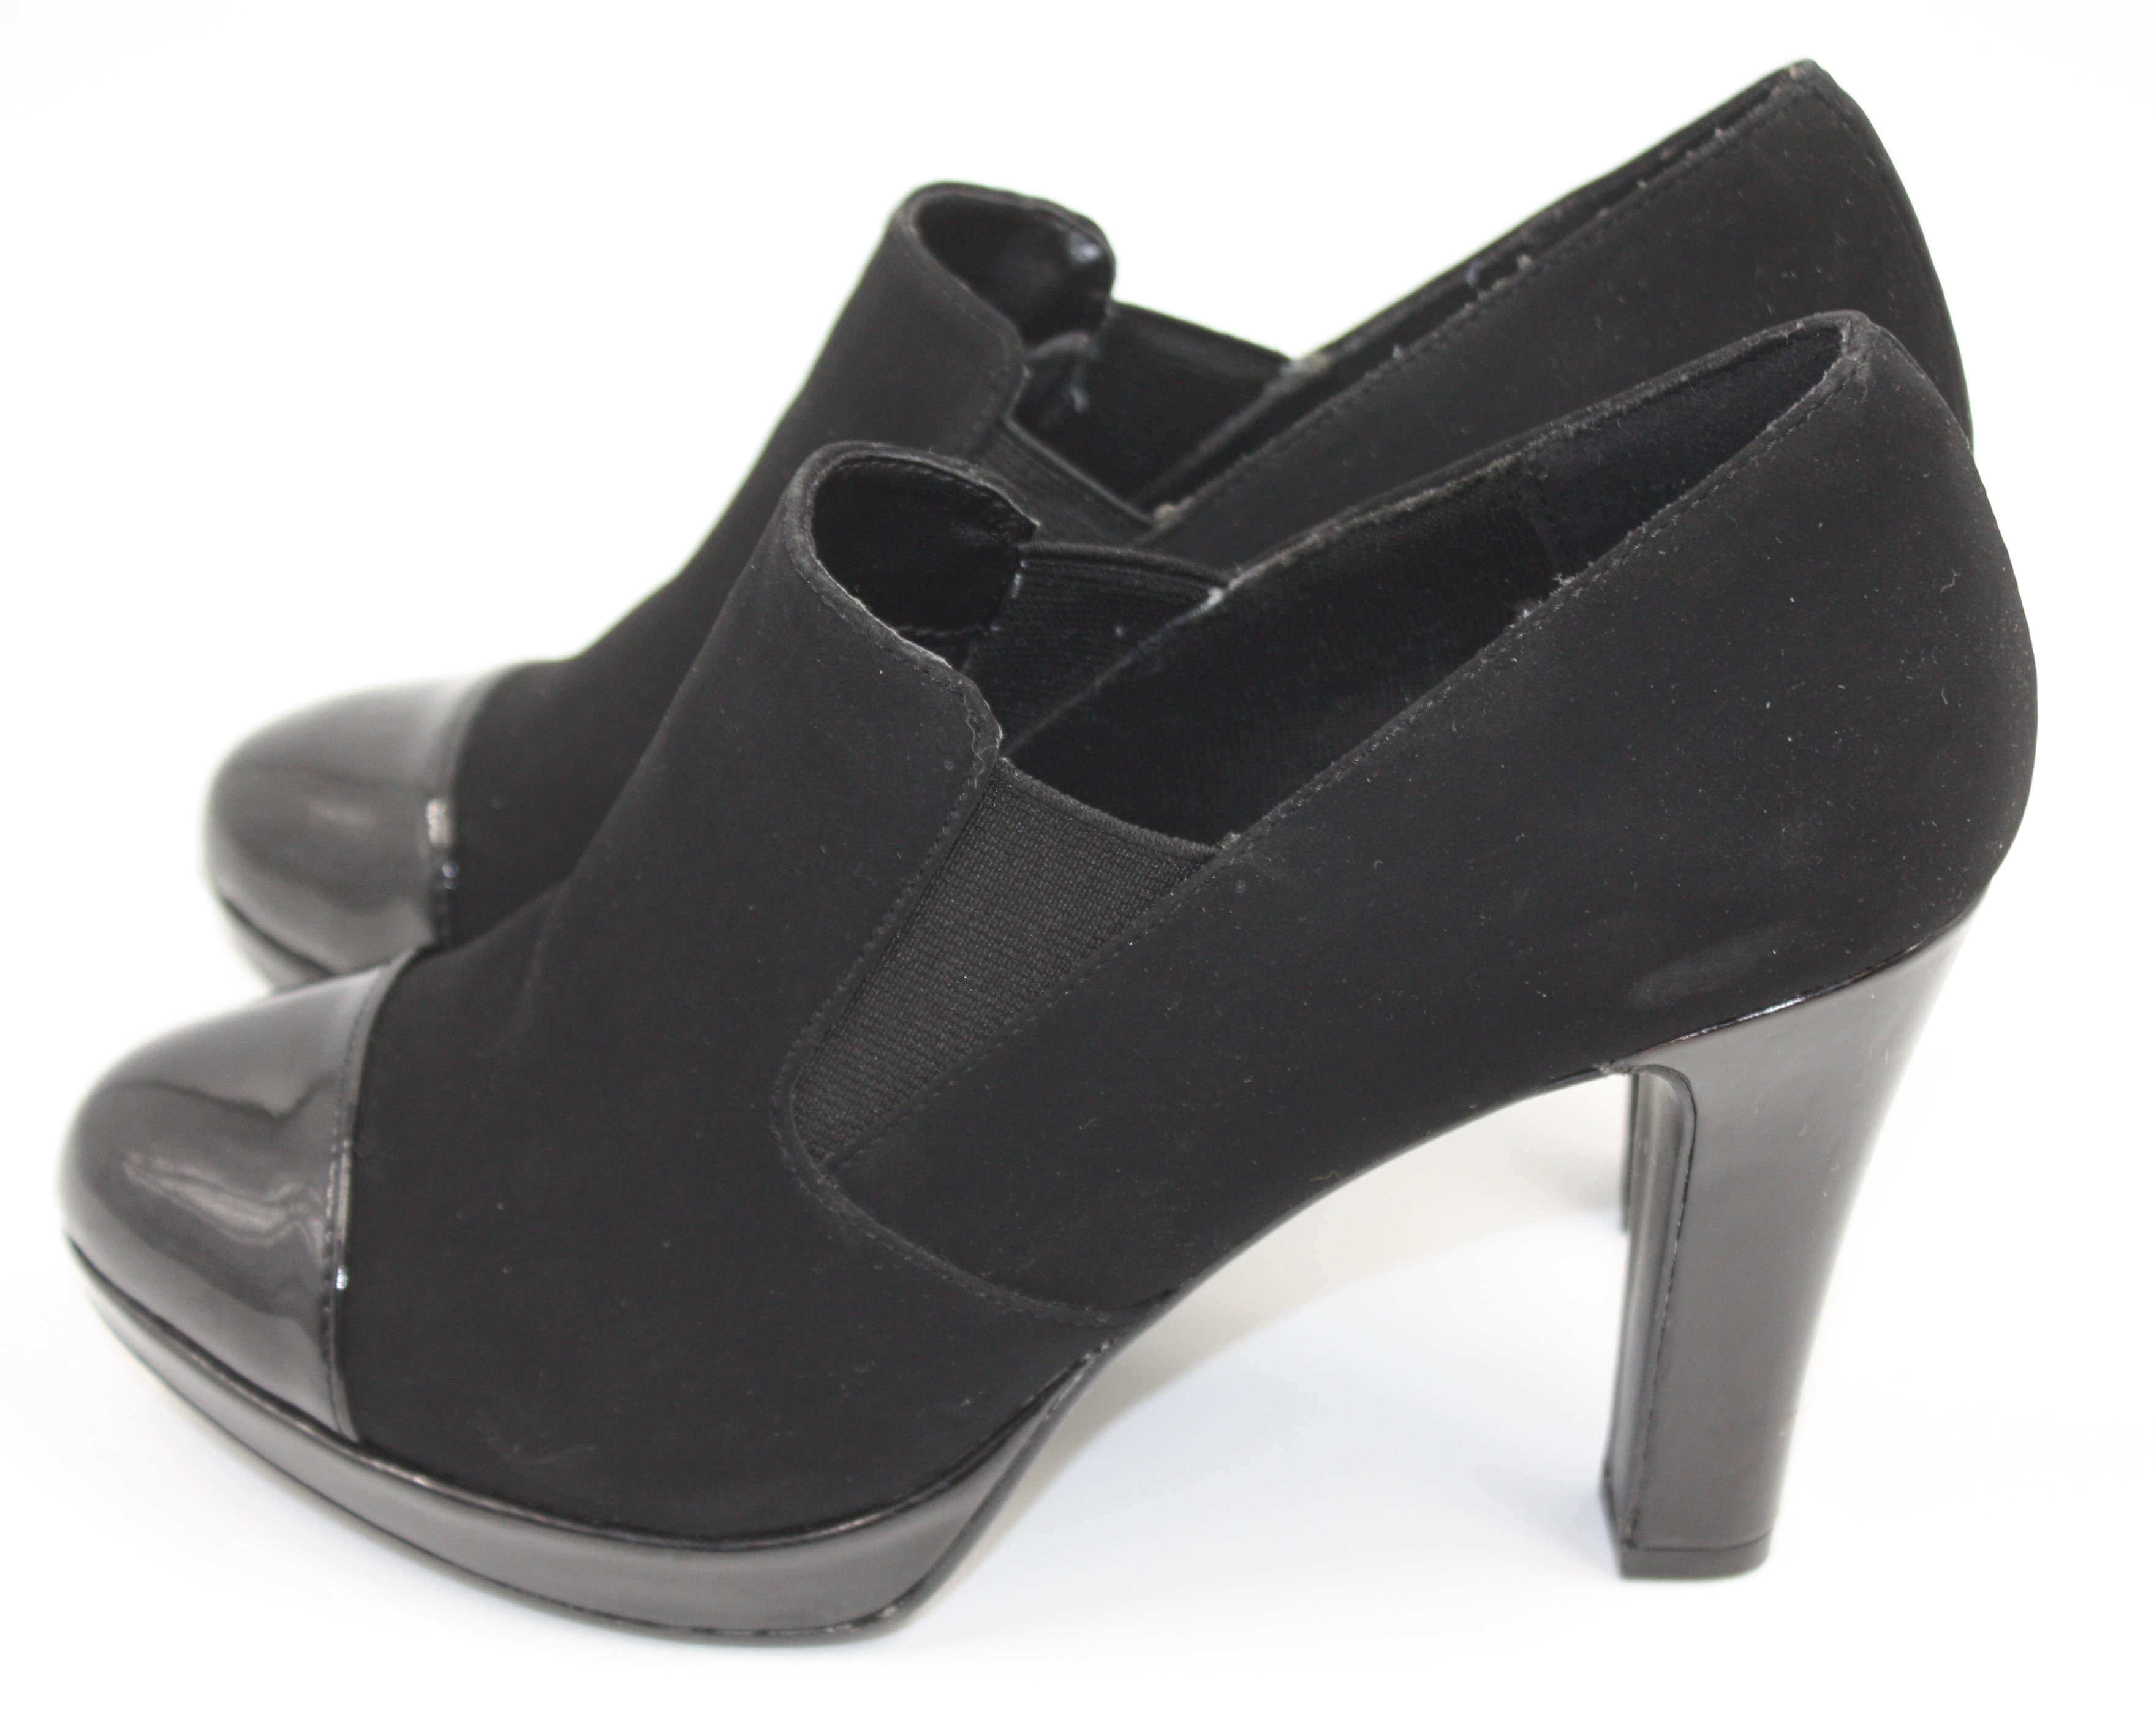 Impo Ladies Womens Black High Heels Pumps Shoes Size 7.5 M | eBay